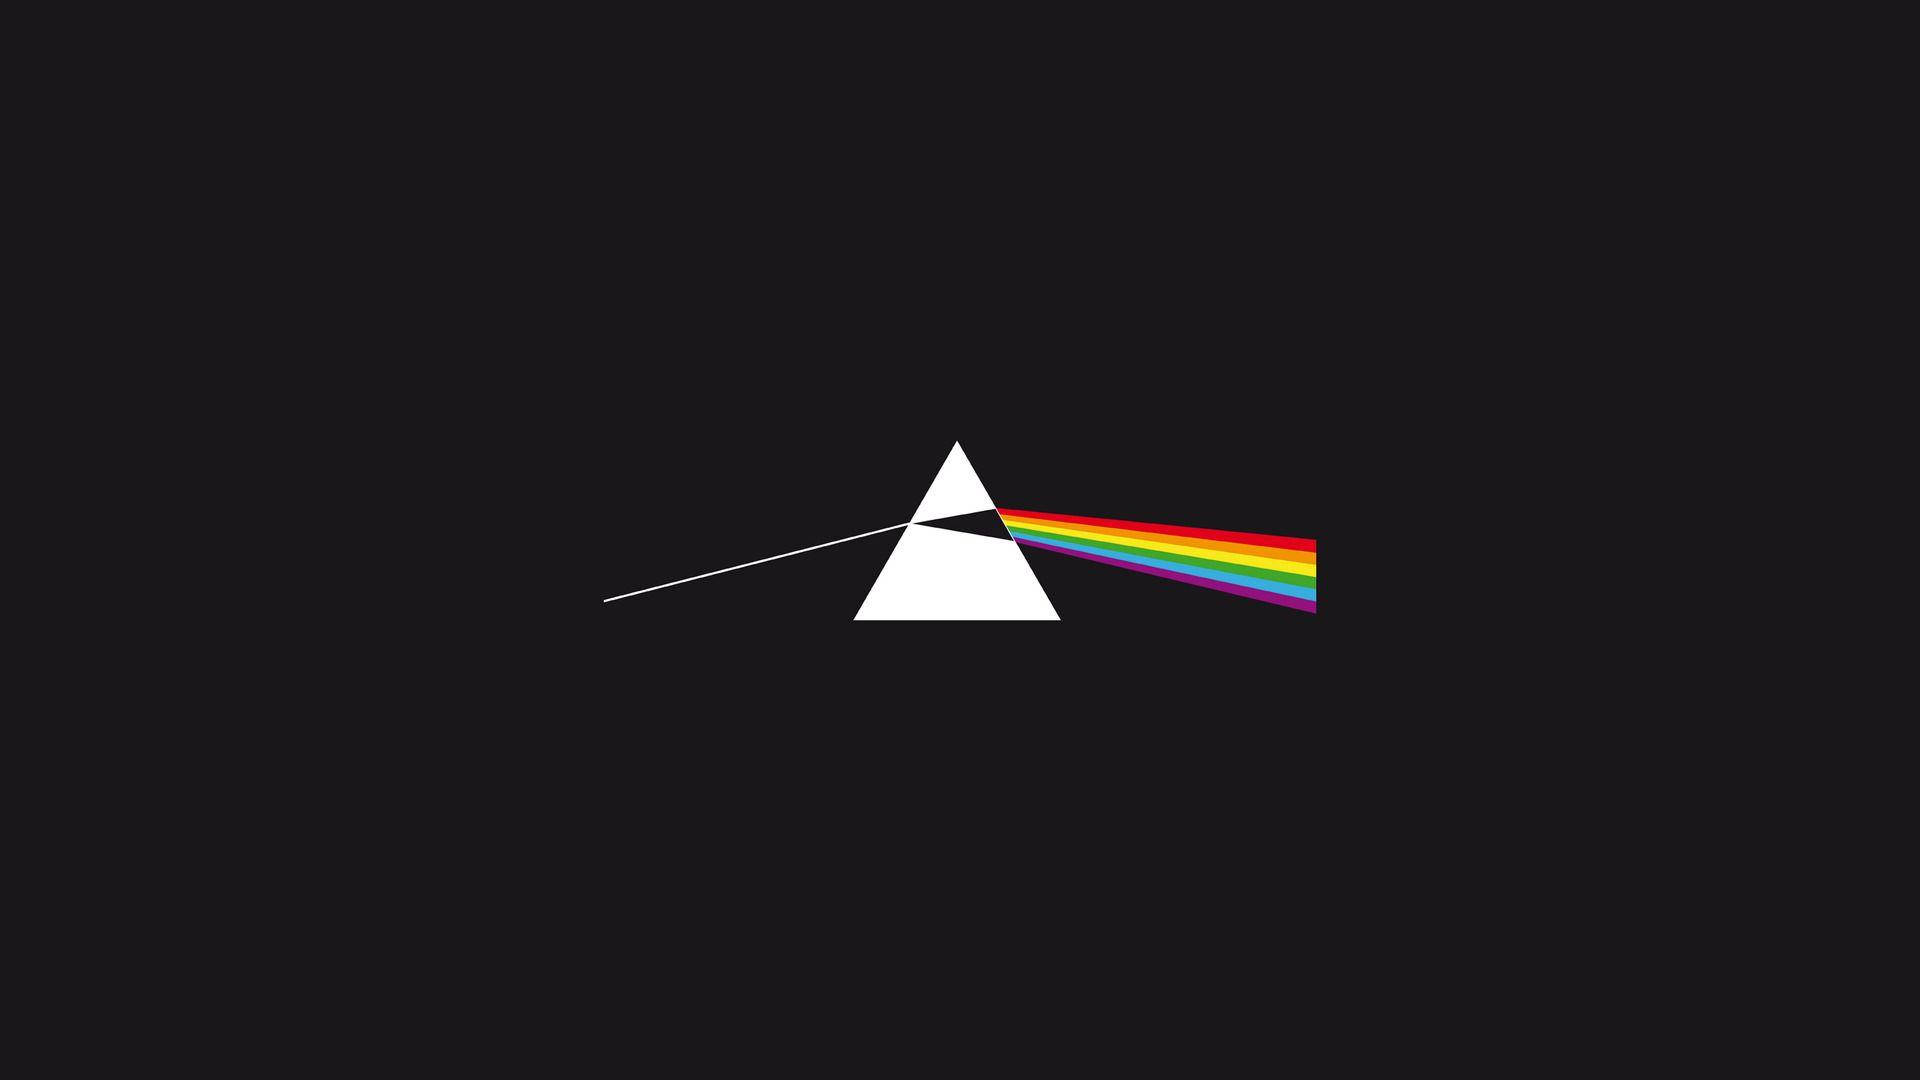 Minimalist Desktop Pink Floyd Album Wallpaper